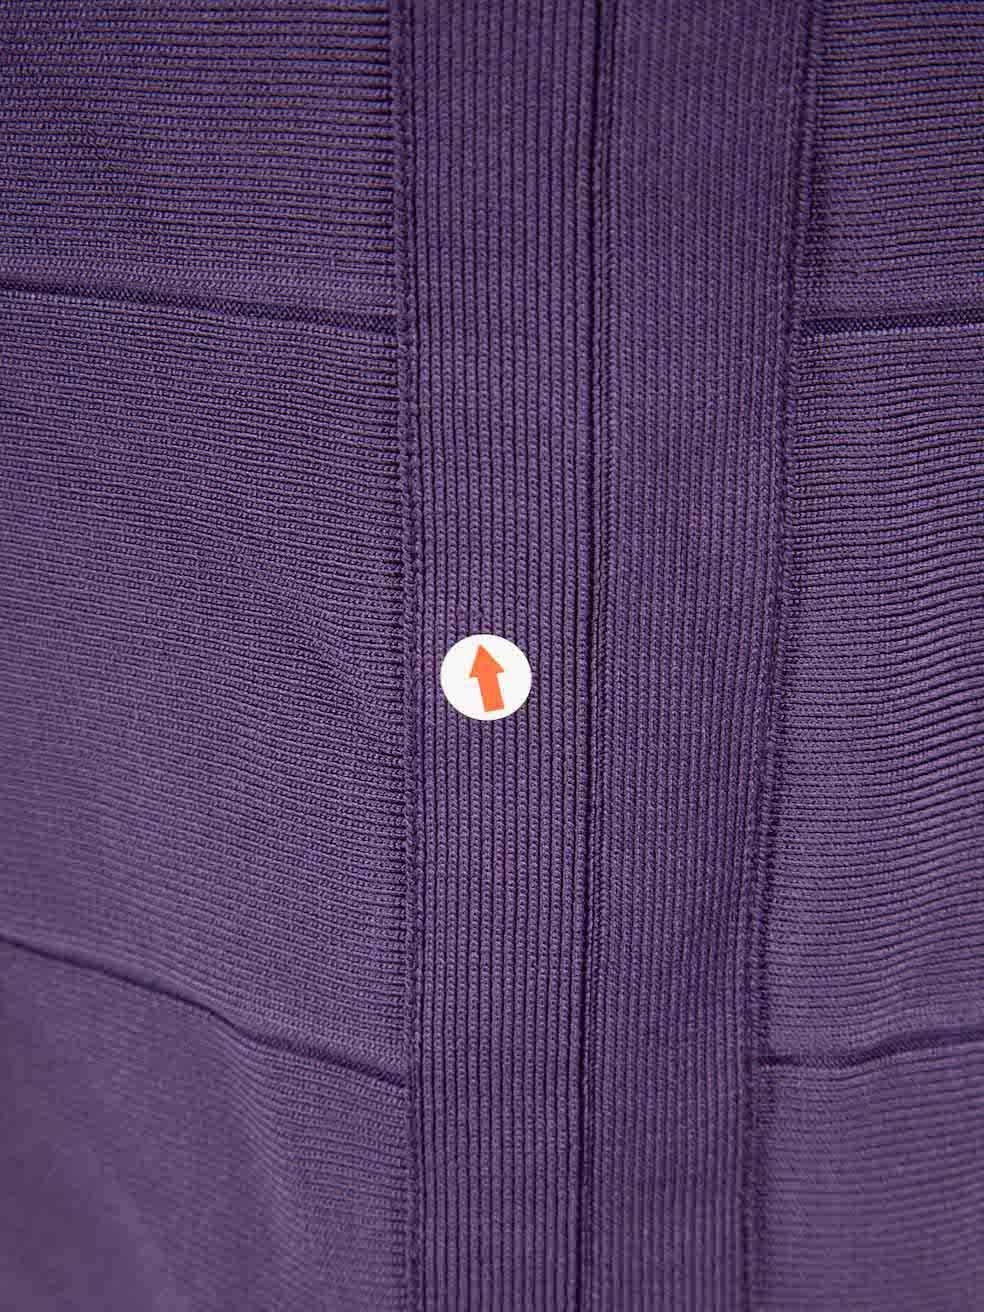 Herve Leger Purple Square Neck Bodycon Dress Size XS For Sale 4